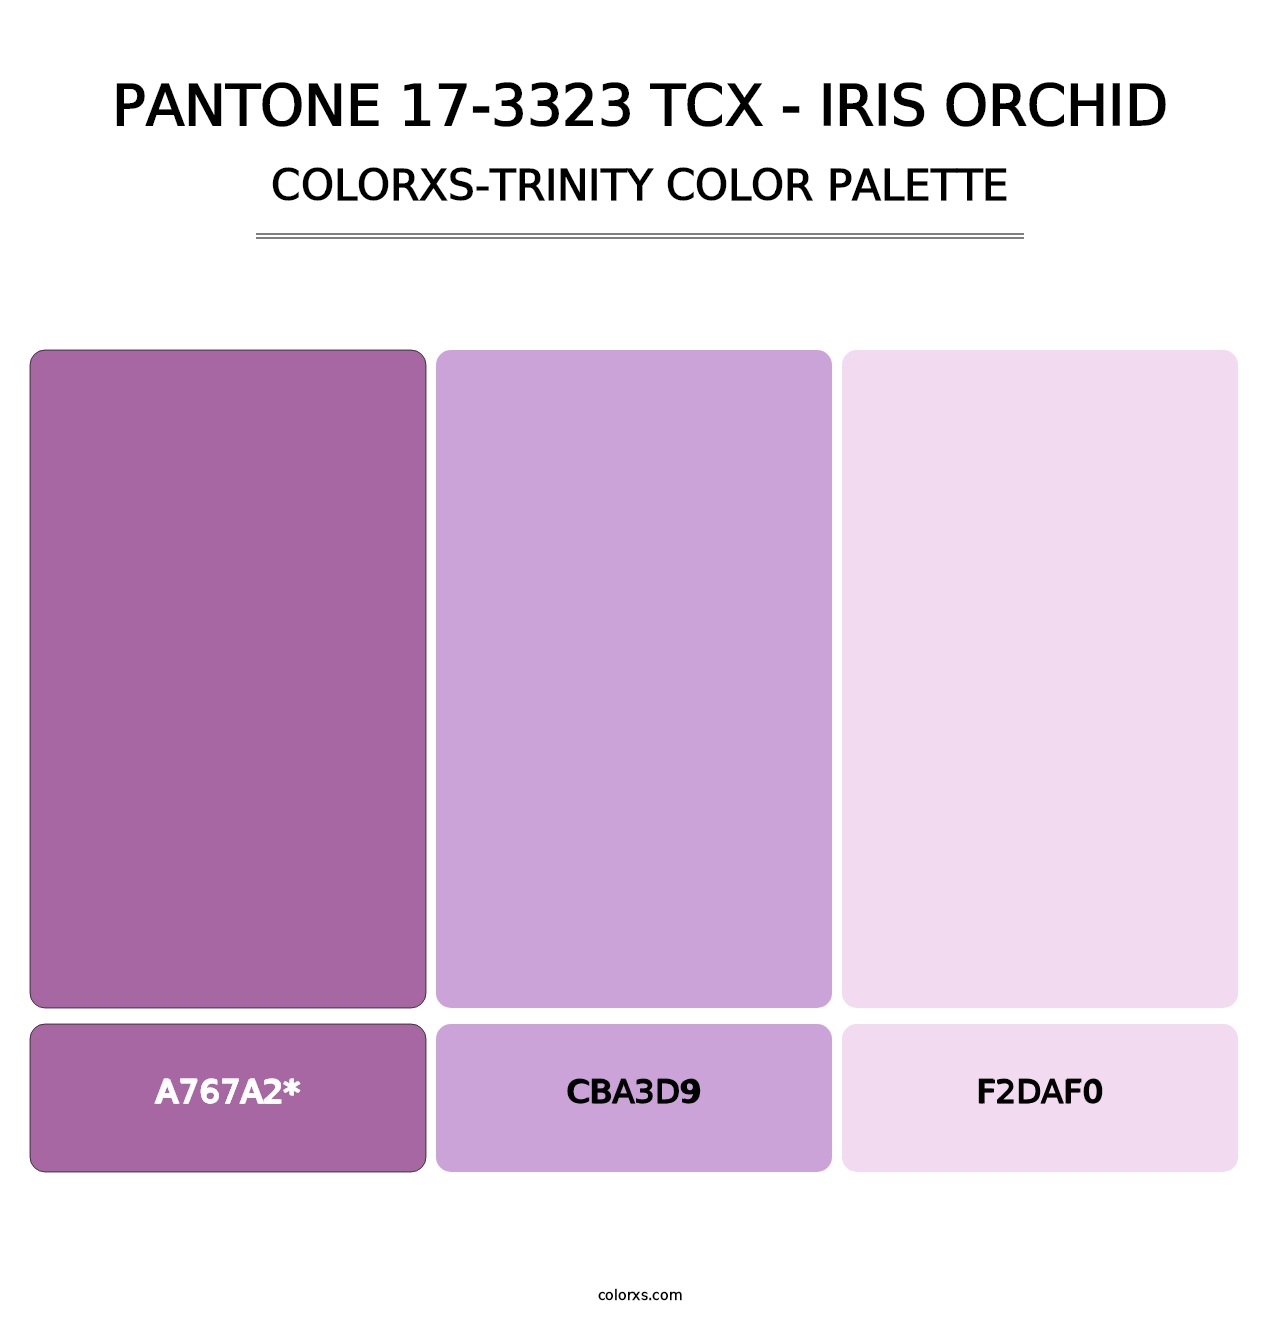 PANTONE 17-3323 TCX - Iris Orchid - Colorxs Trinity Palette